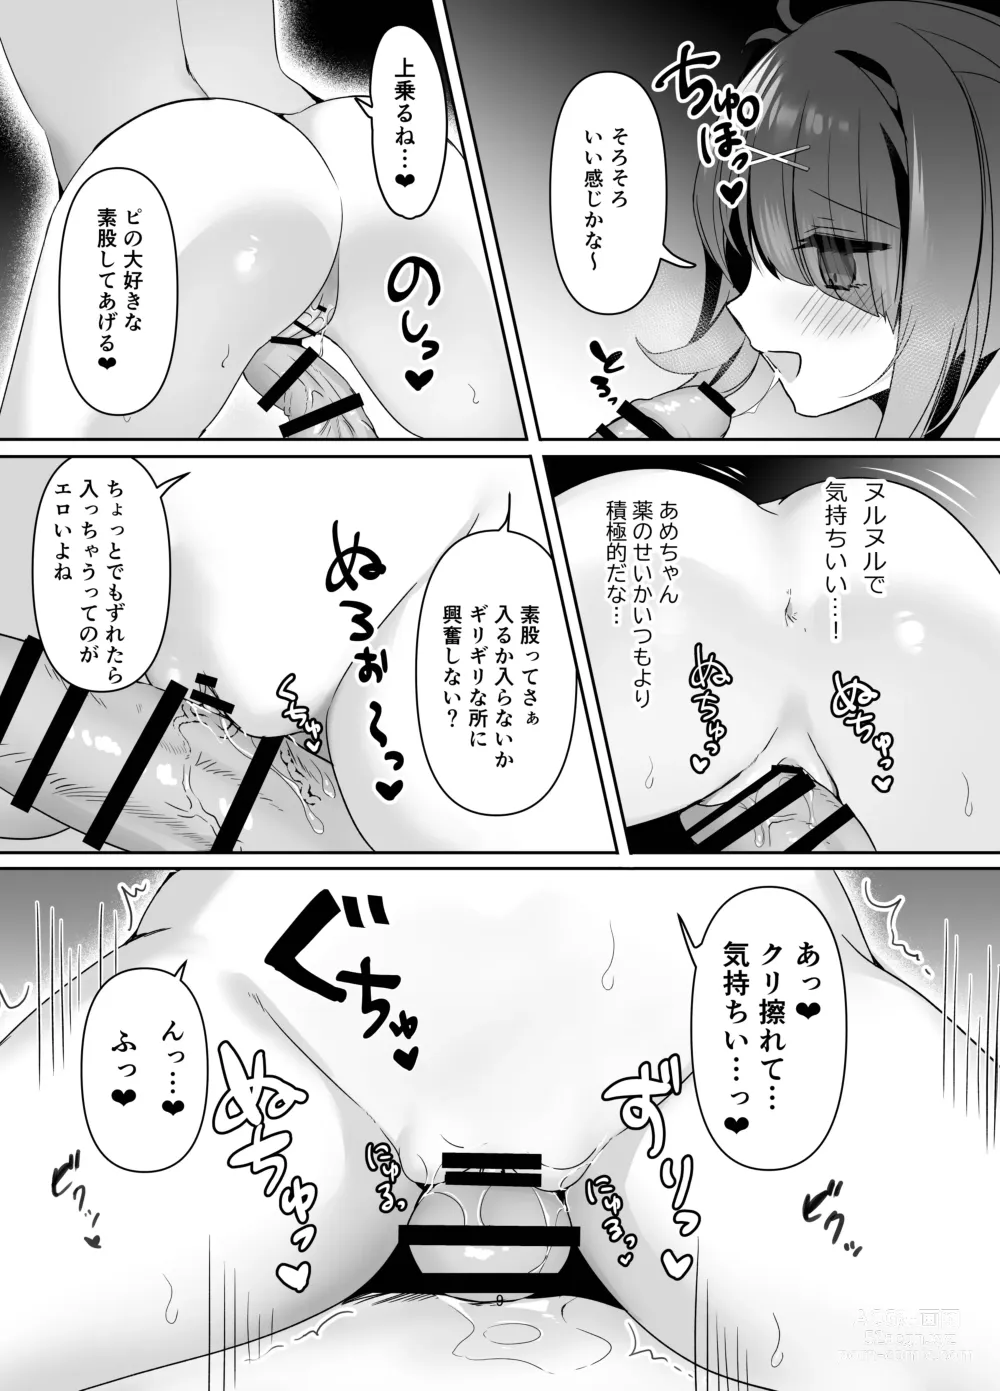 Page 9 of doujinshi Boku wa Ame-chan ni Sakaraenai - I cant resist Ame-chan.